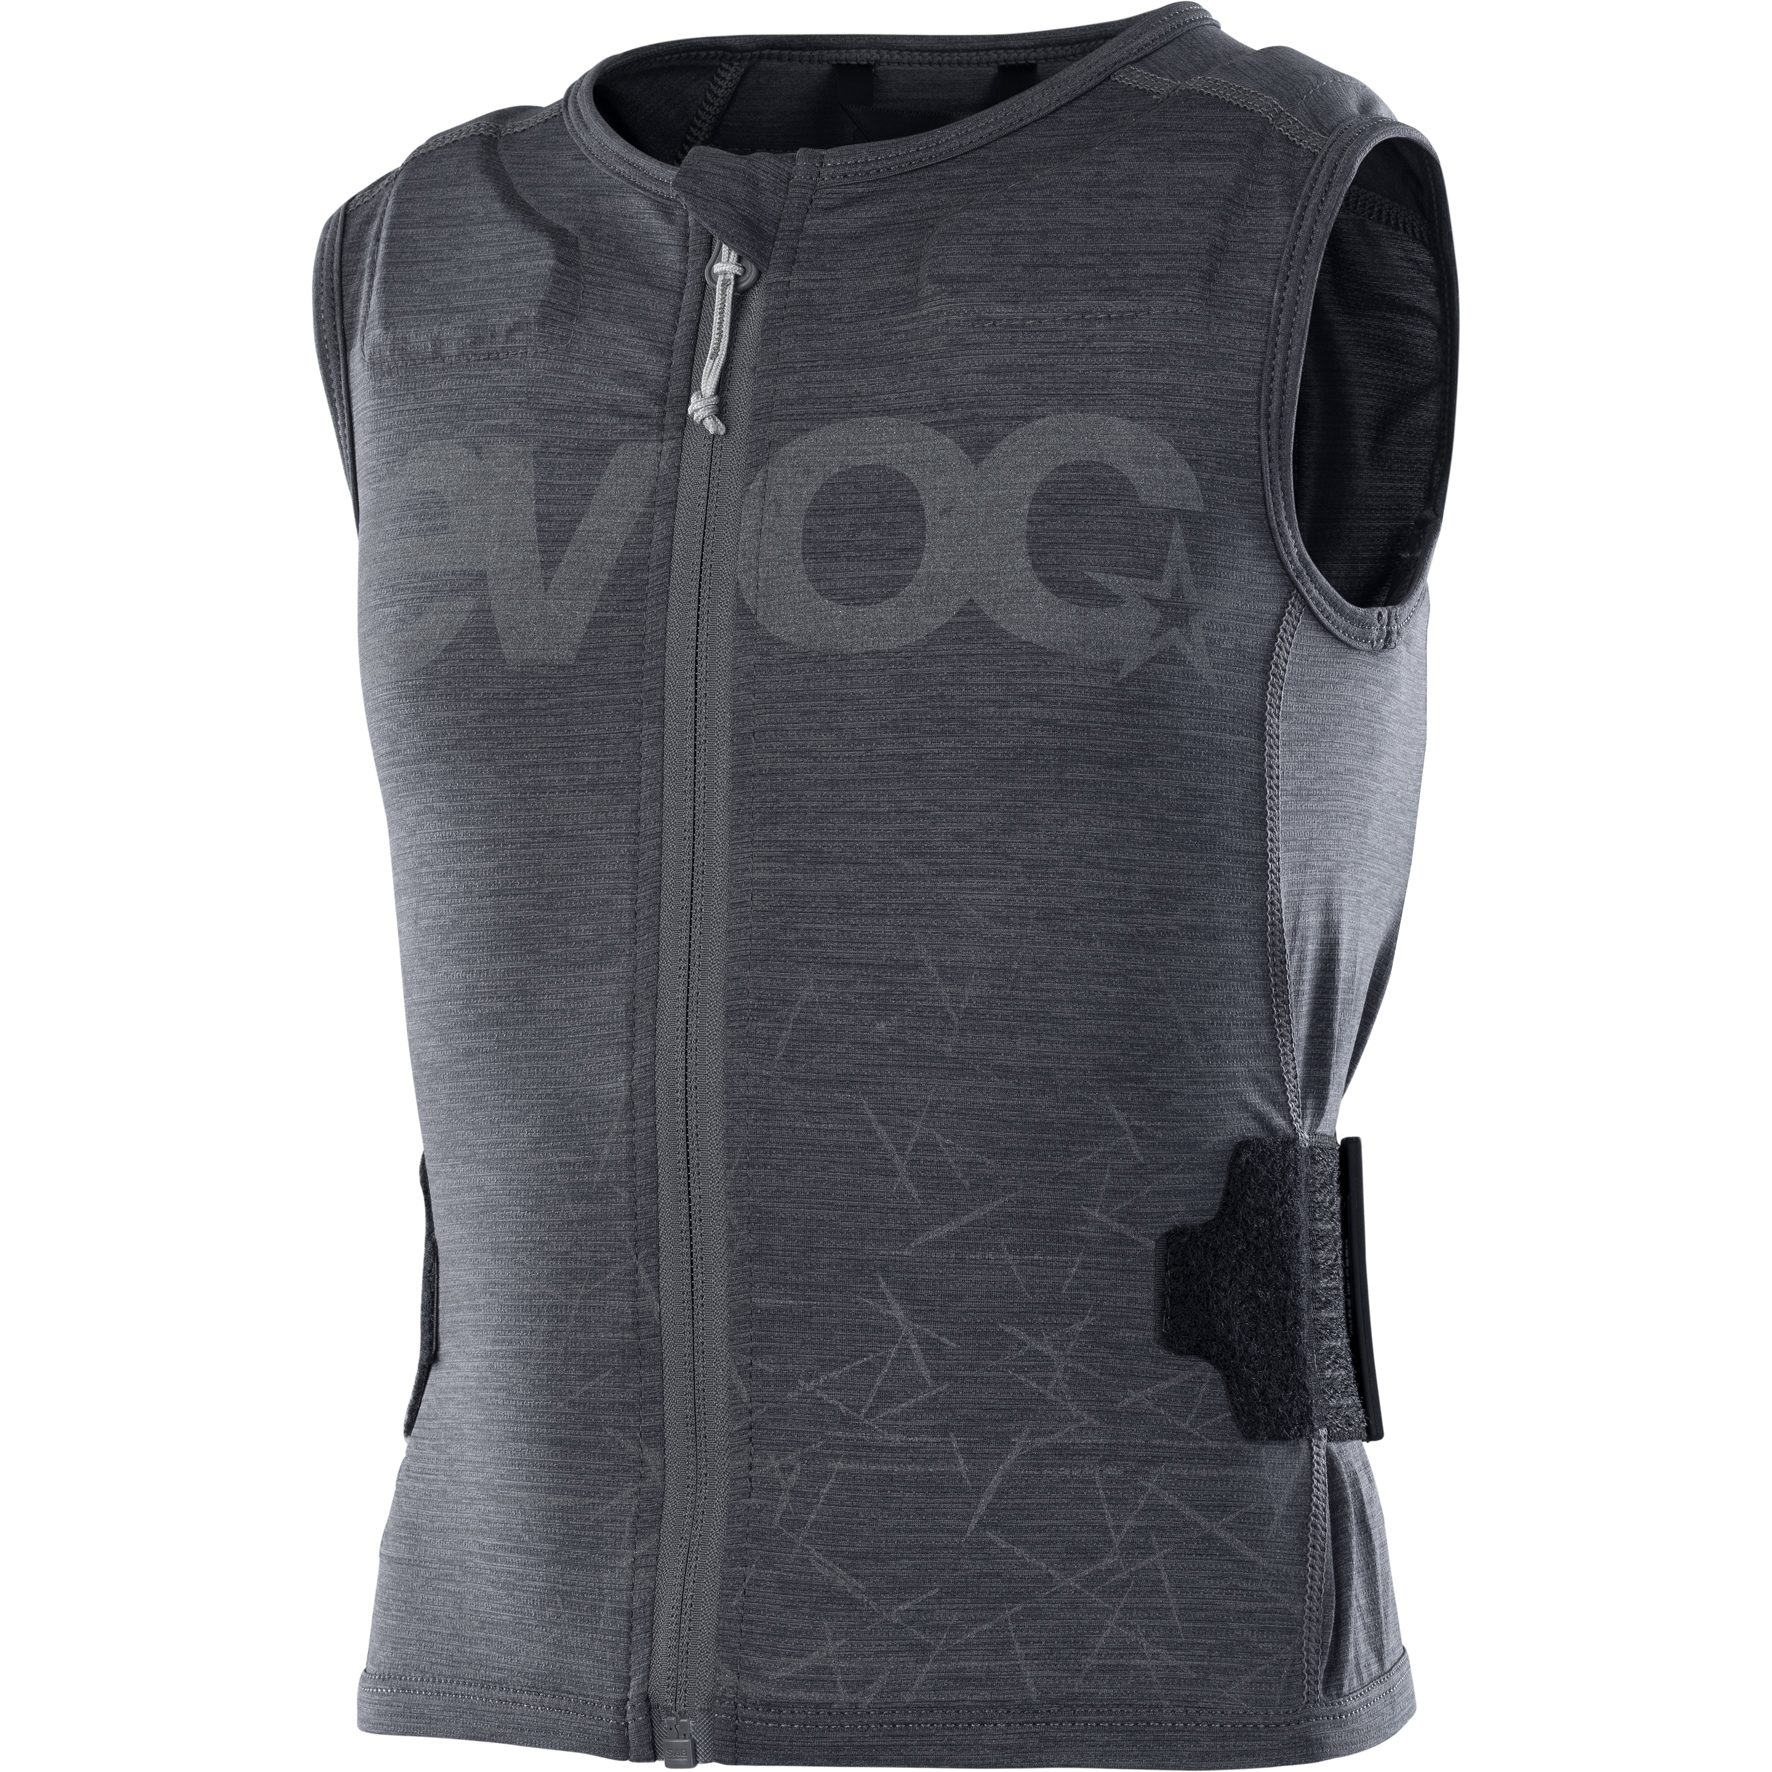 Picture of EVOC Protector Vest Kids - Carbon Grey